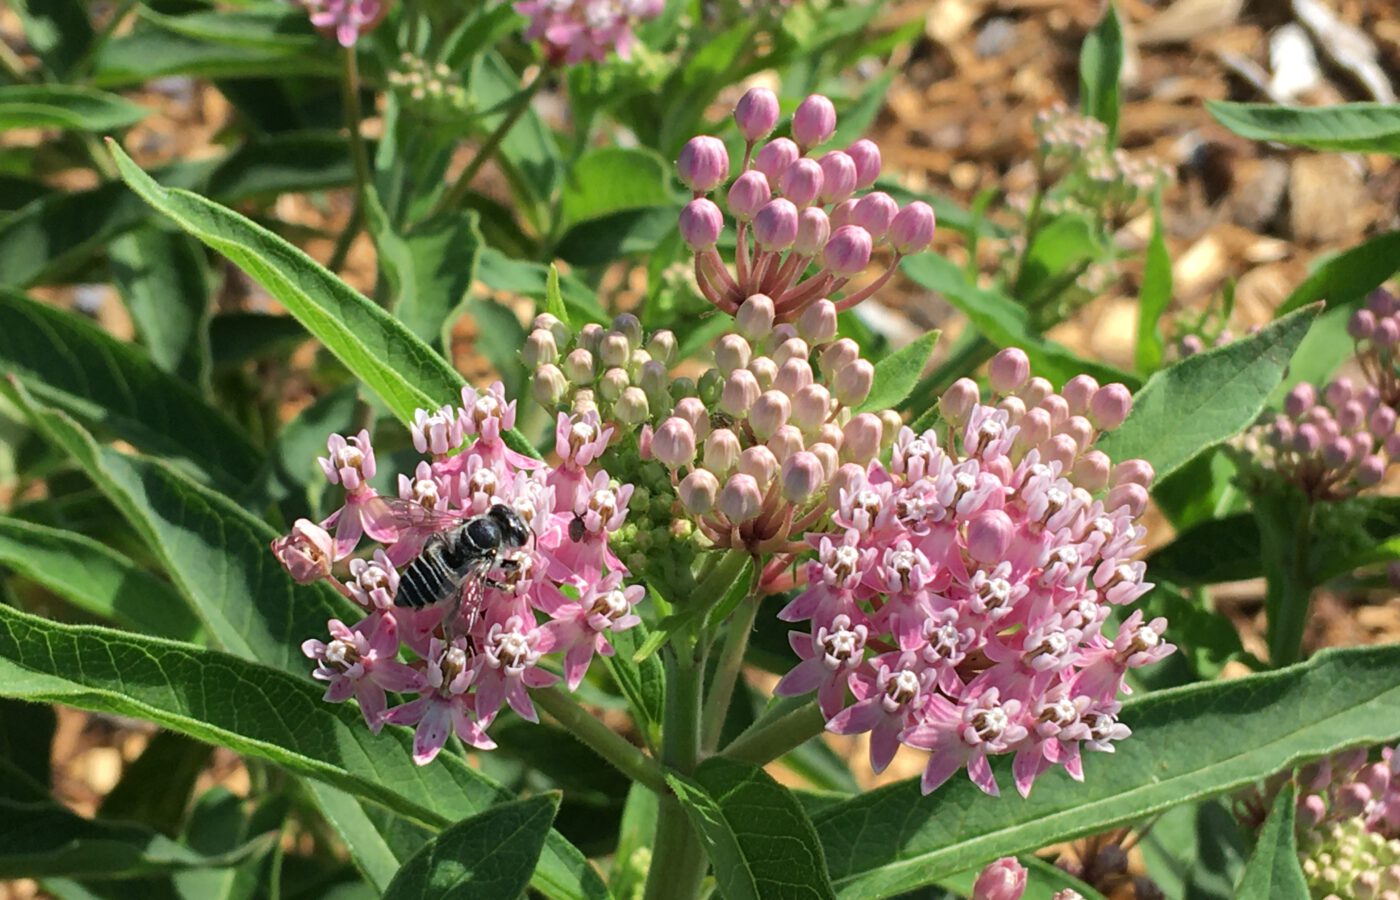 Bee on flower in pollinator garden